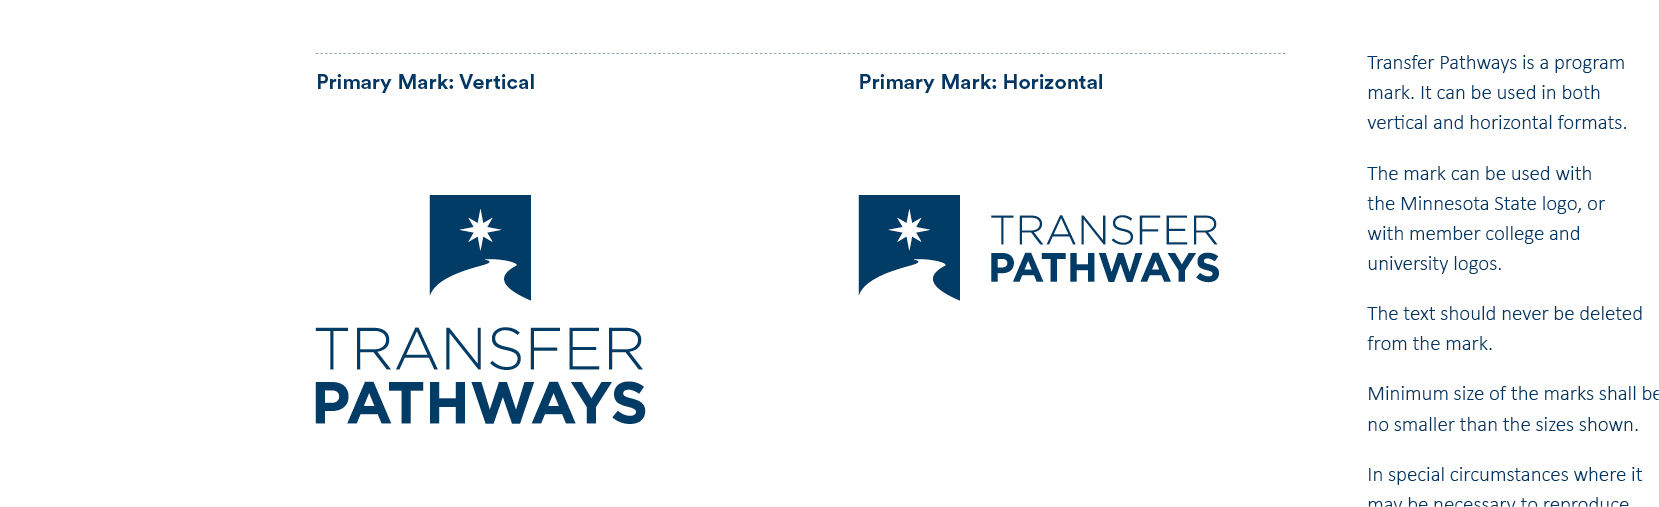 Transfer Pathways branding